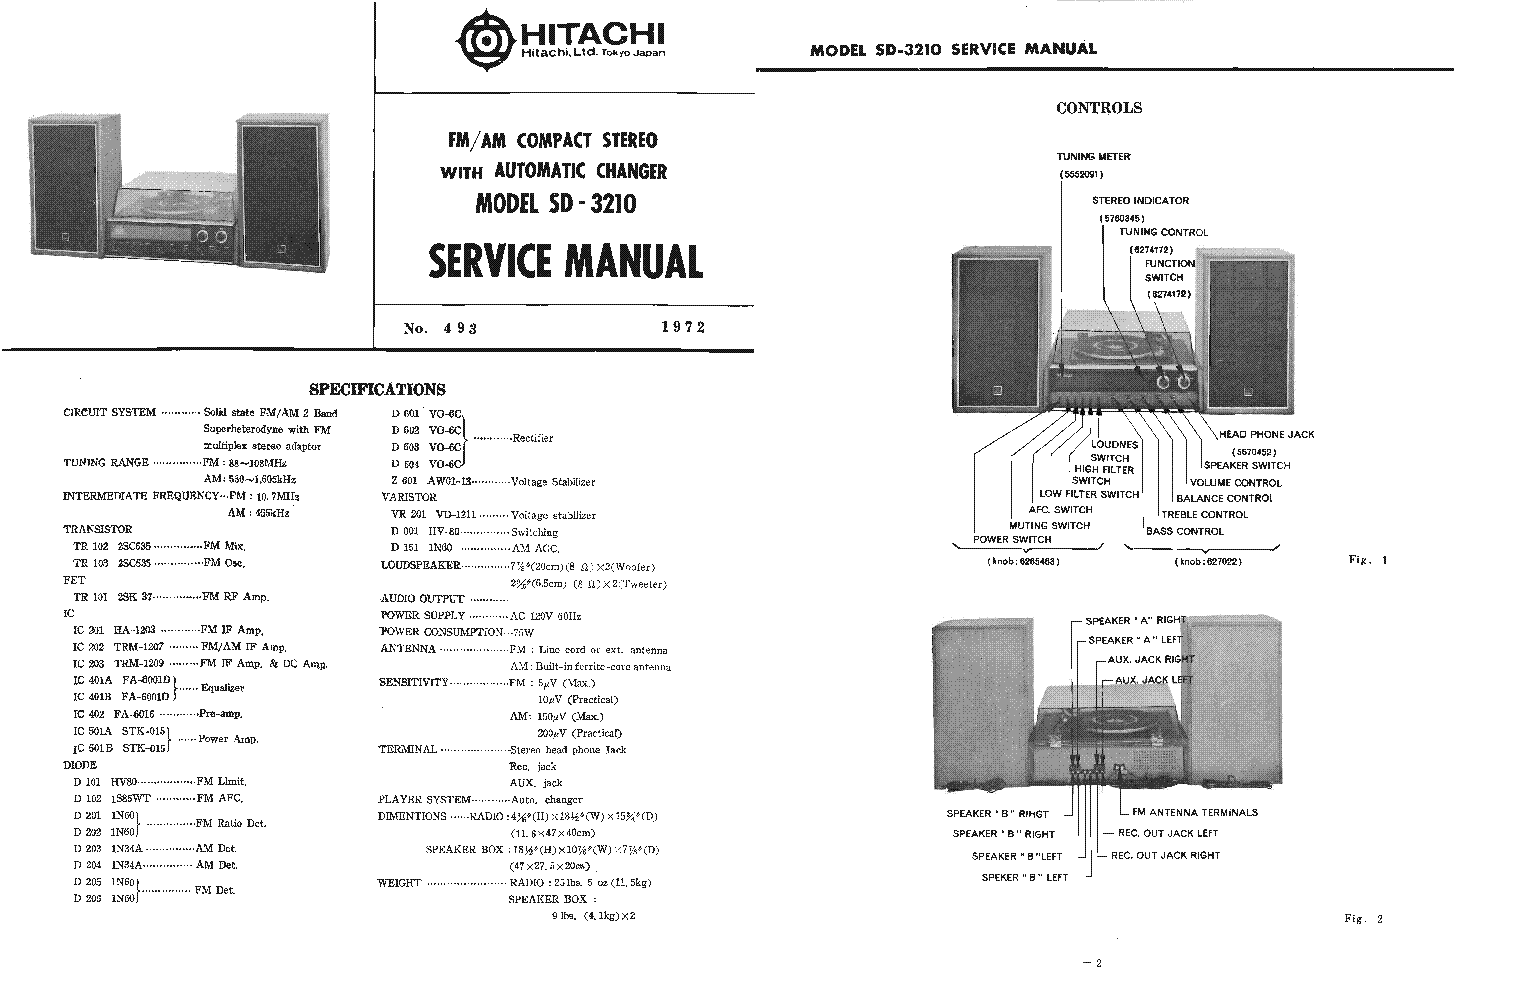 HITACHI SD-3210 service manual (1st page)